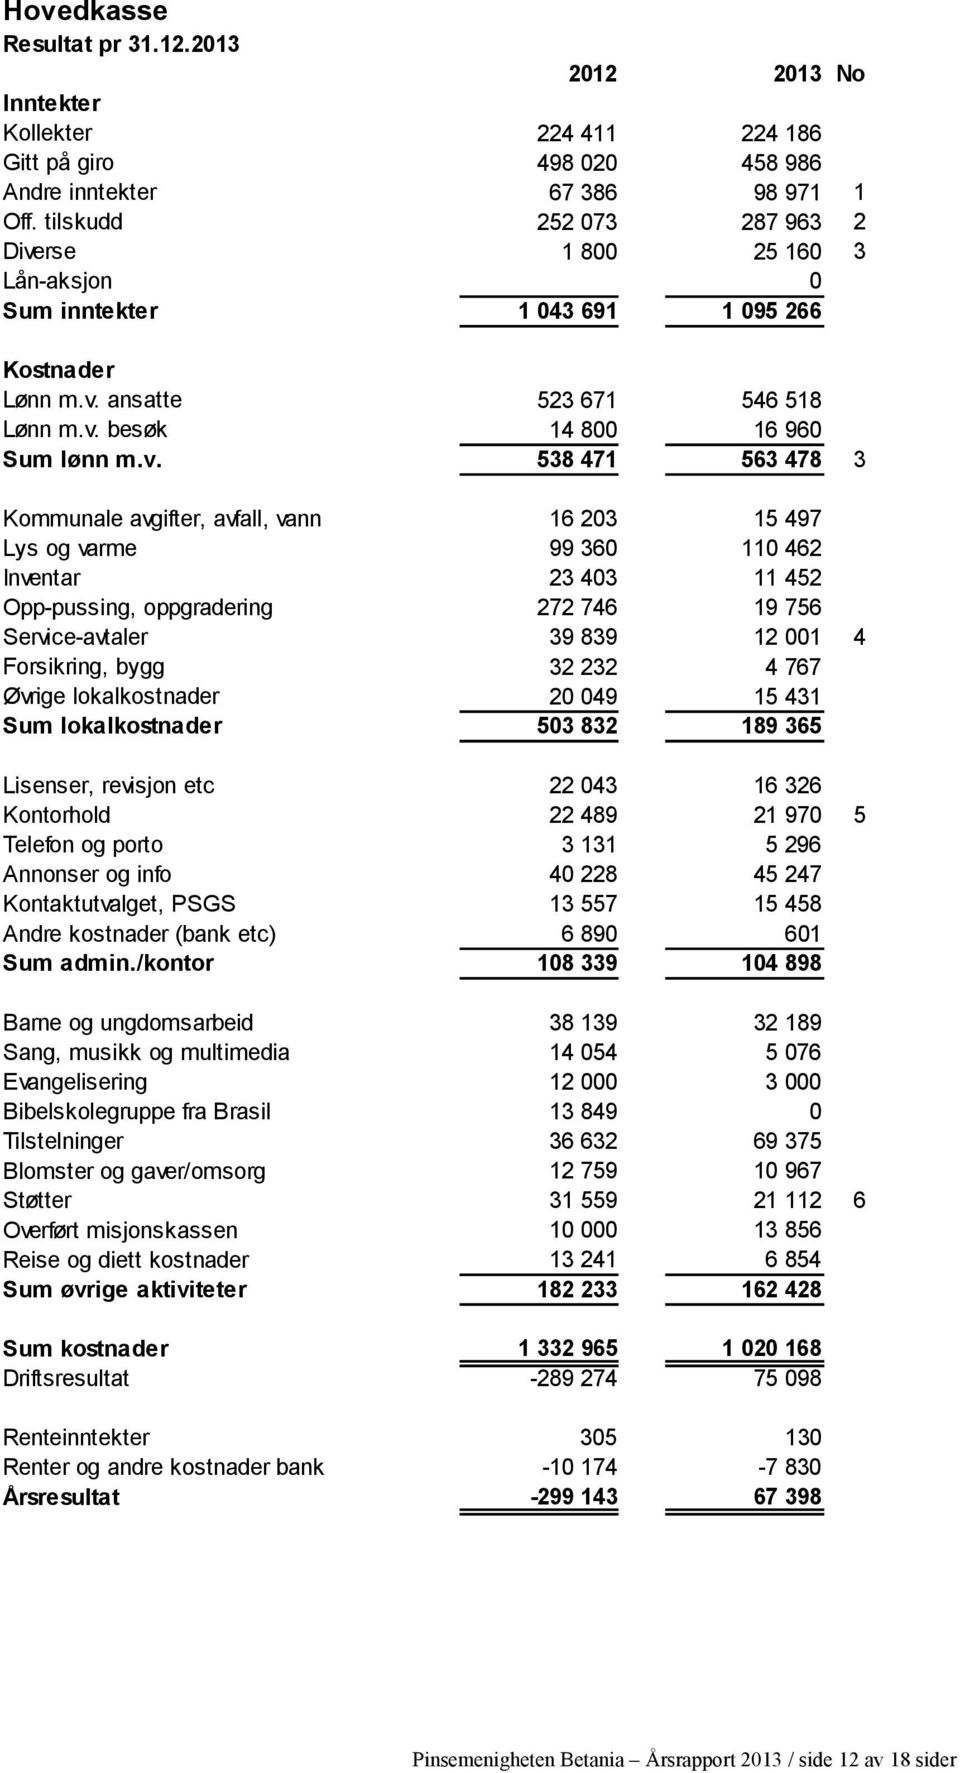 rse 1 800 25 160 3 Lån-aksjon 0 Sum inntekter 1 043 691 1 095 266 Kostnader Lønn m.v.